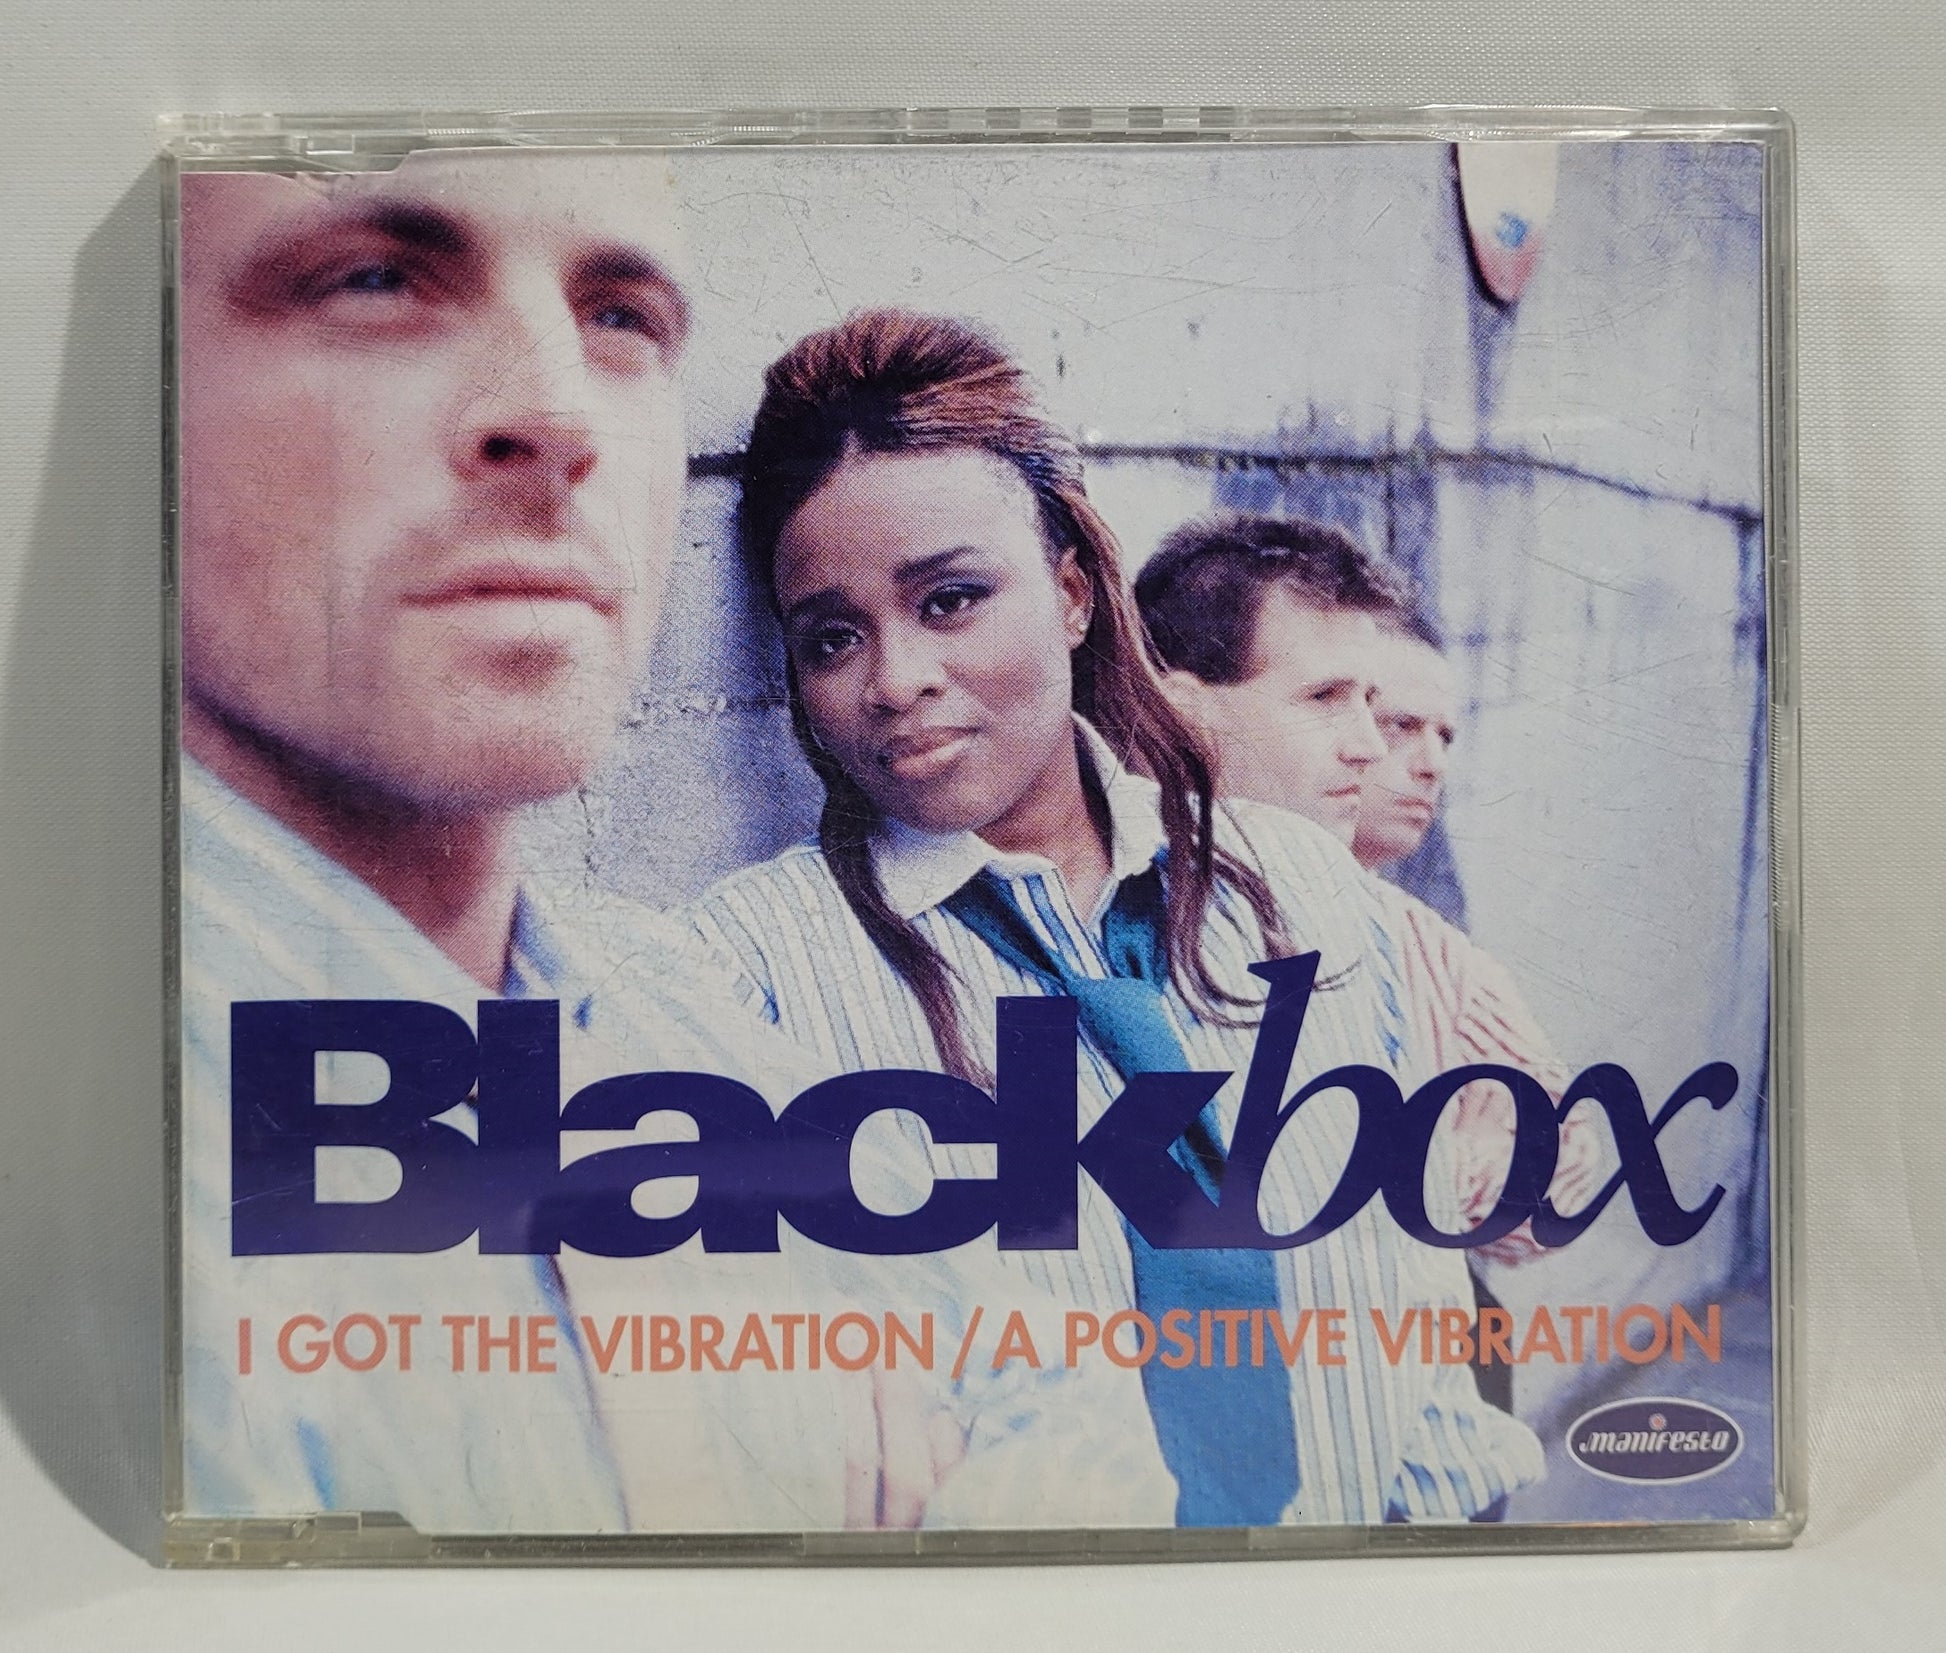 Blackbox - I Got the Vibration / A Positive Vibration [CD Single]